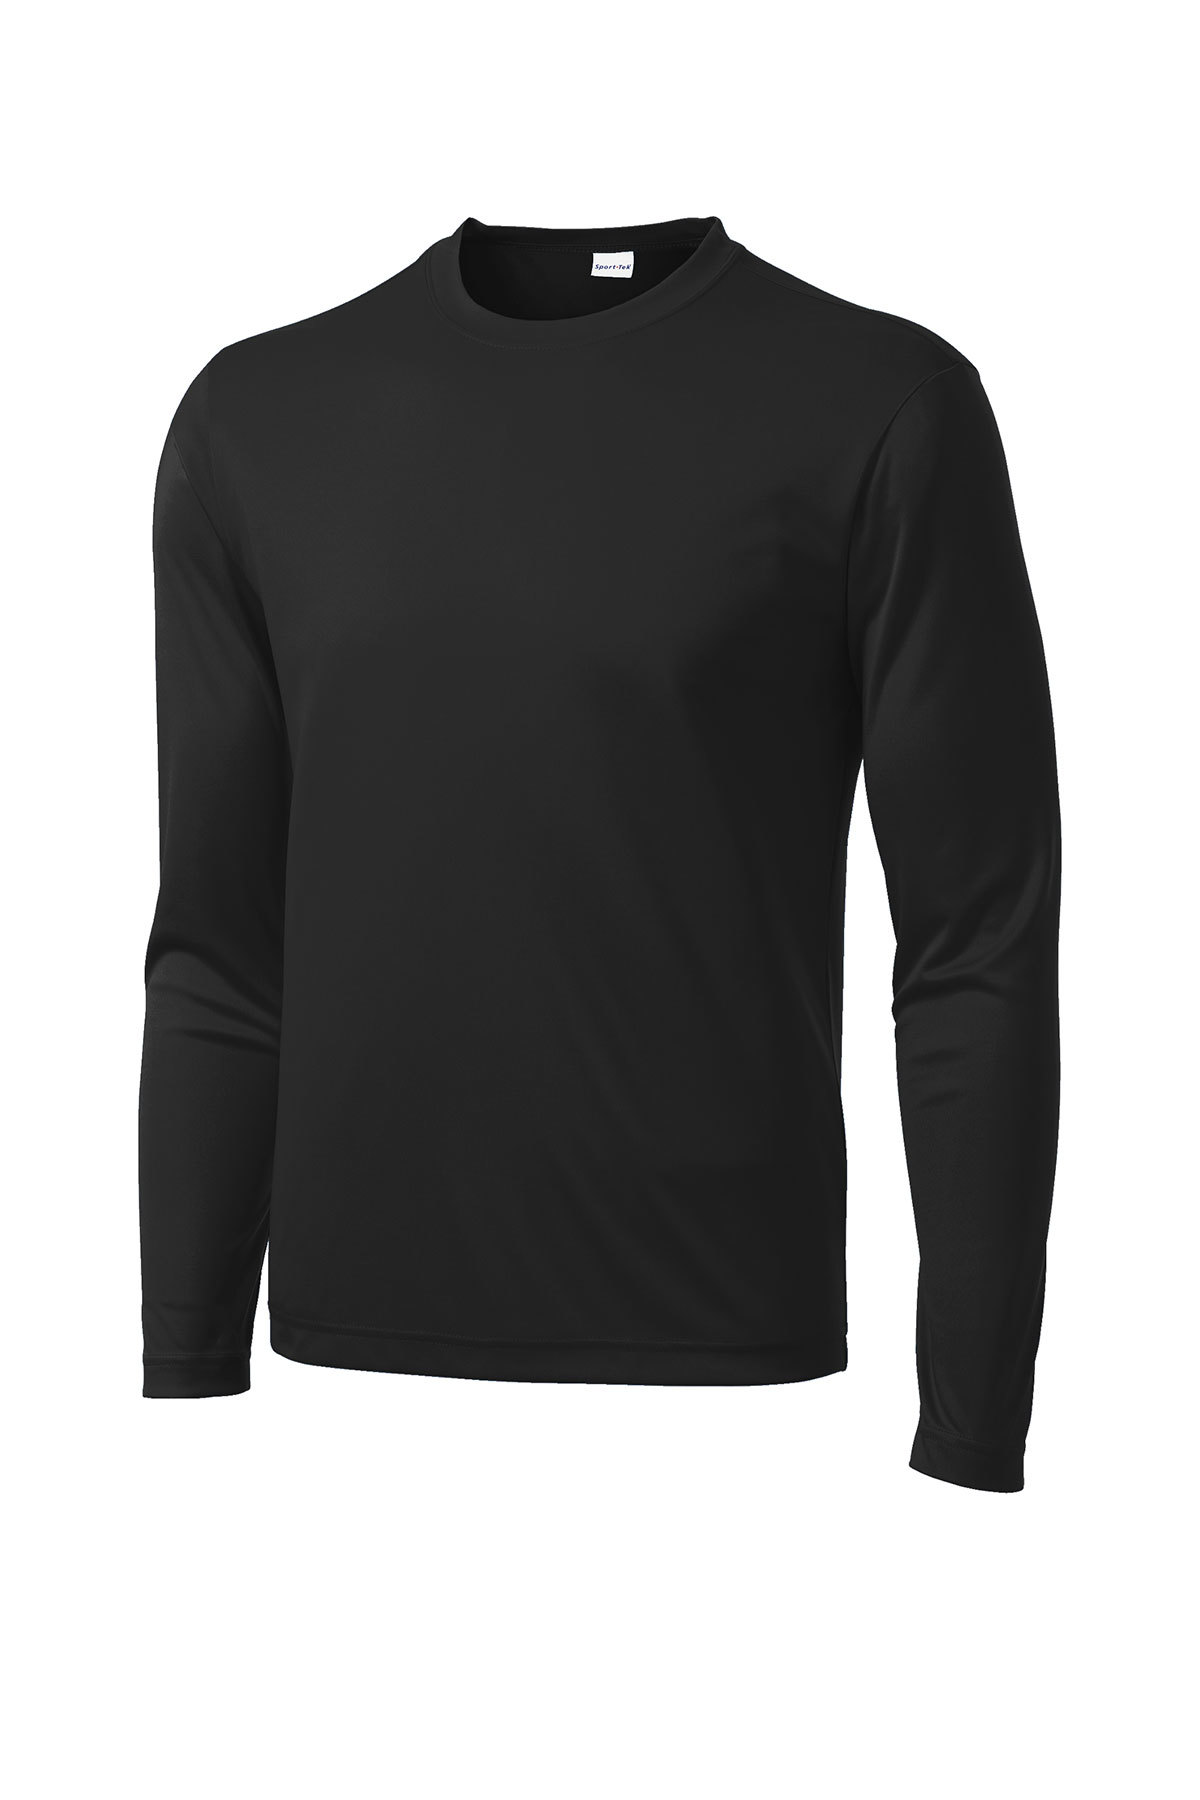 MEN'S MOISTURE WICKING Dri fit Long Sleeve SPORT-TEK T-shirt NEW XS-4XL ST350LS 